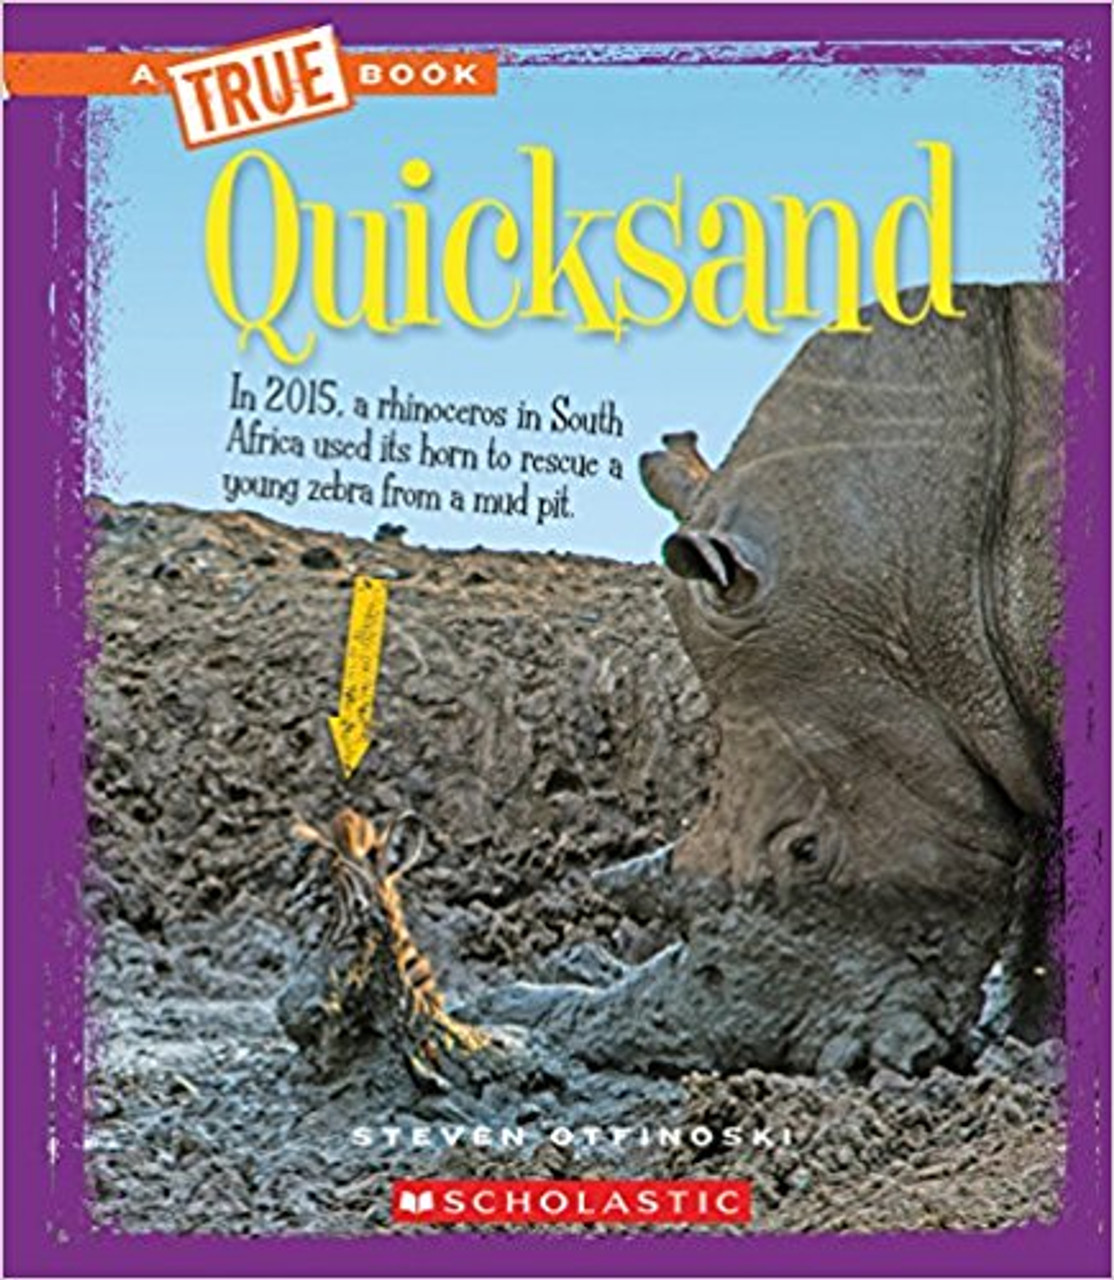 Quicksand by Steven Oftinoski